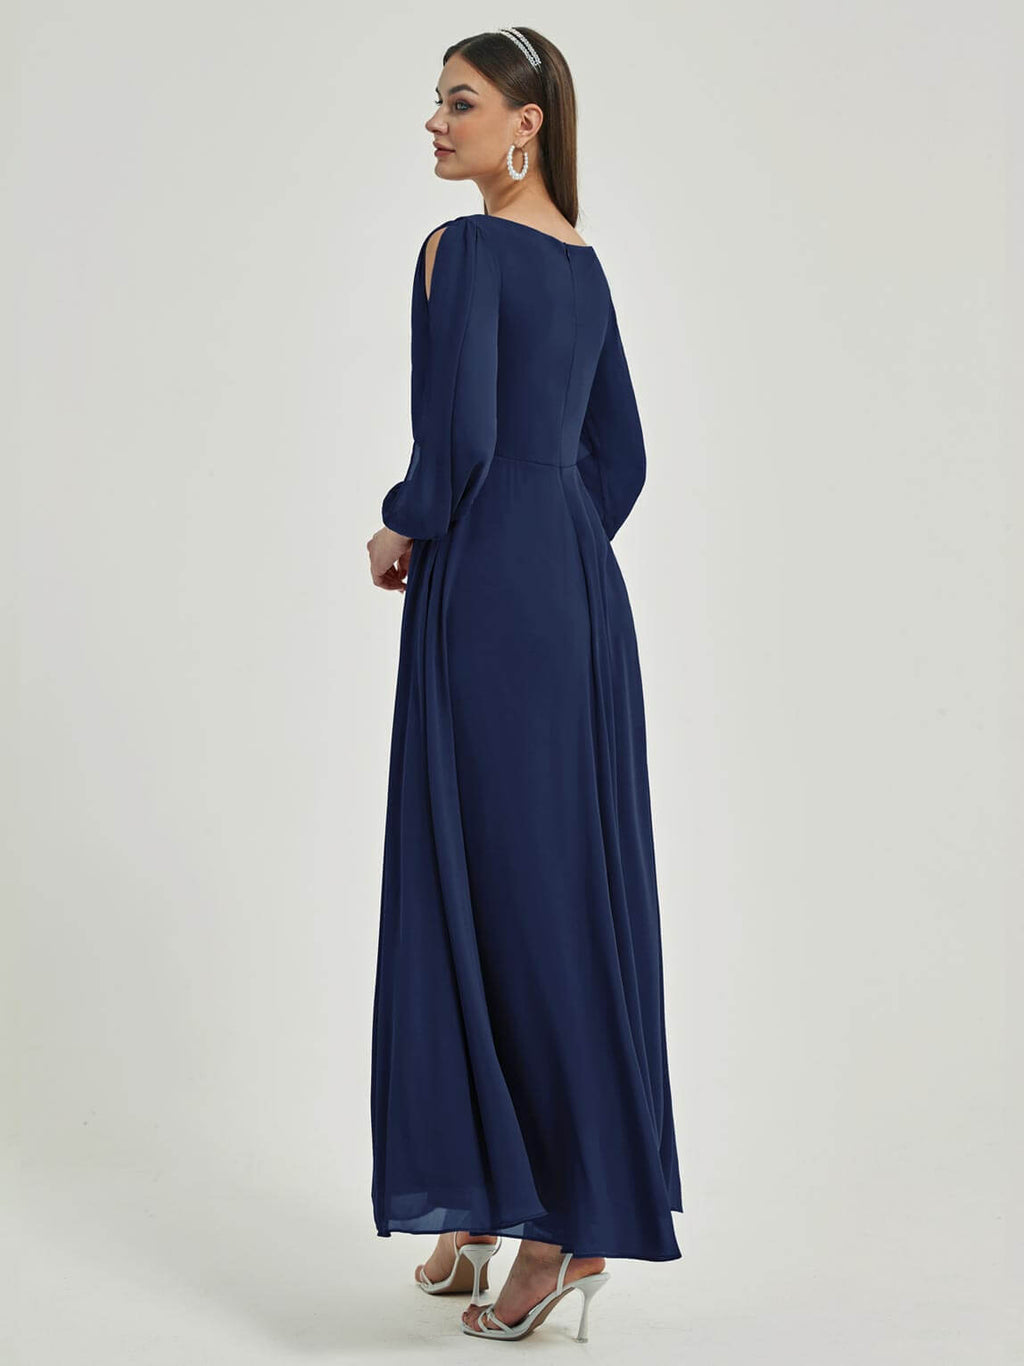 NZ Bridal Navy Blue Long Sleeves Chiffon Floor Length bridesmaid dresses 00461ep Liv a